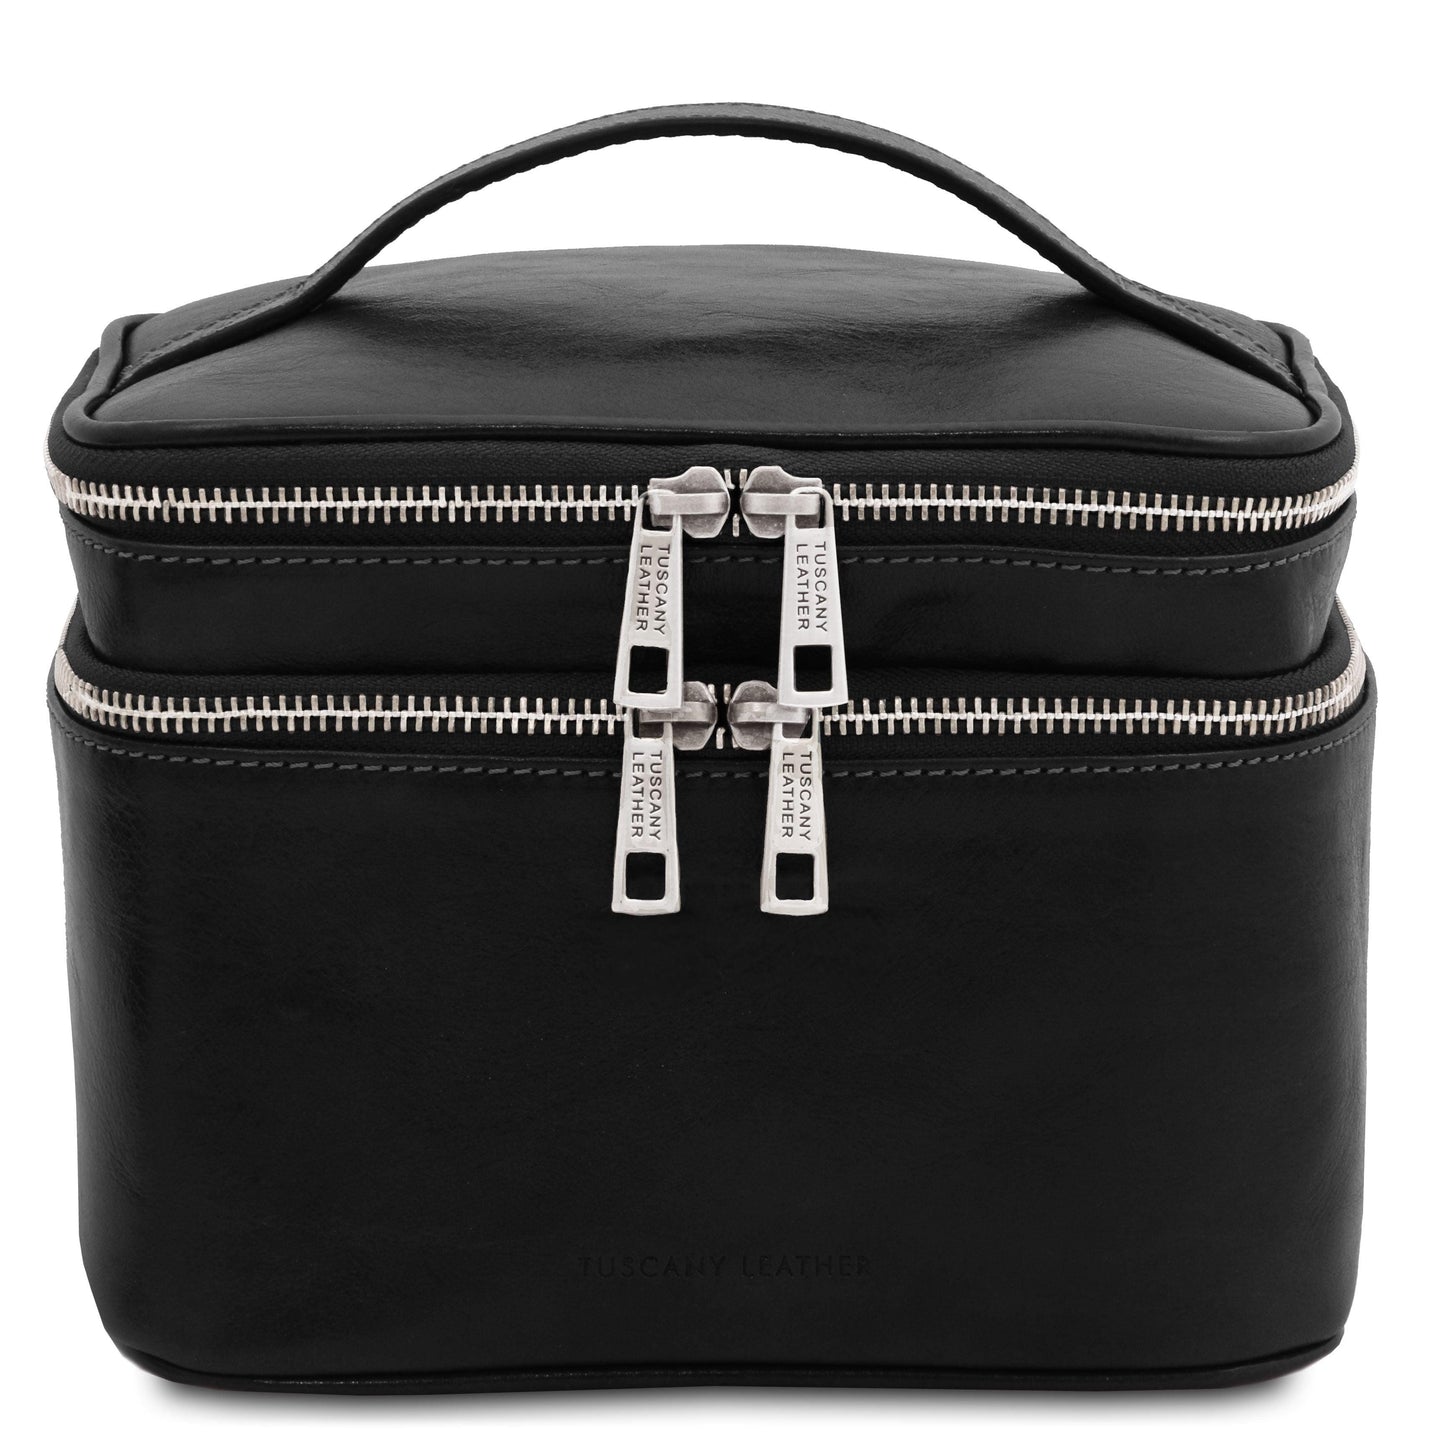 Eliot - Leather toiletry bag train case | TL142045 - Premium Travel leather accessories - Shop now at San Rocco Italia